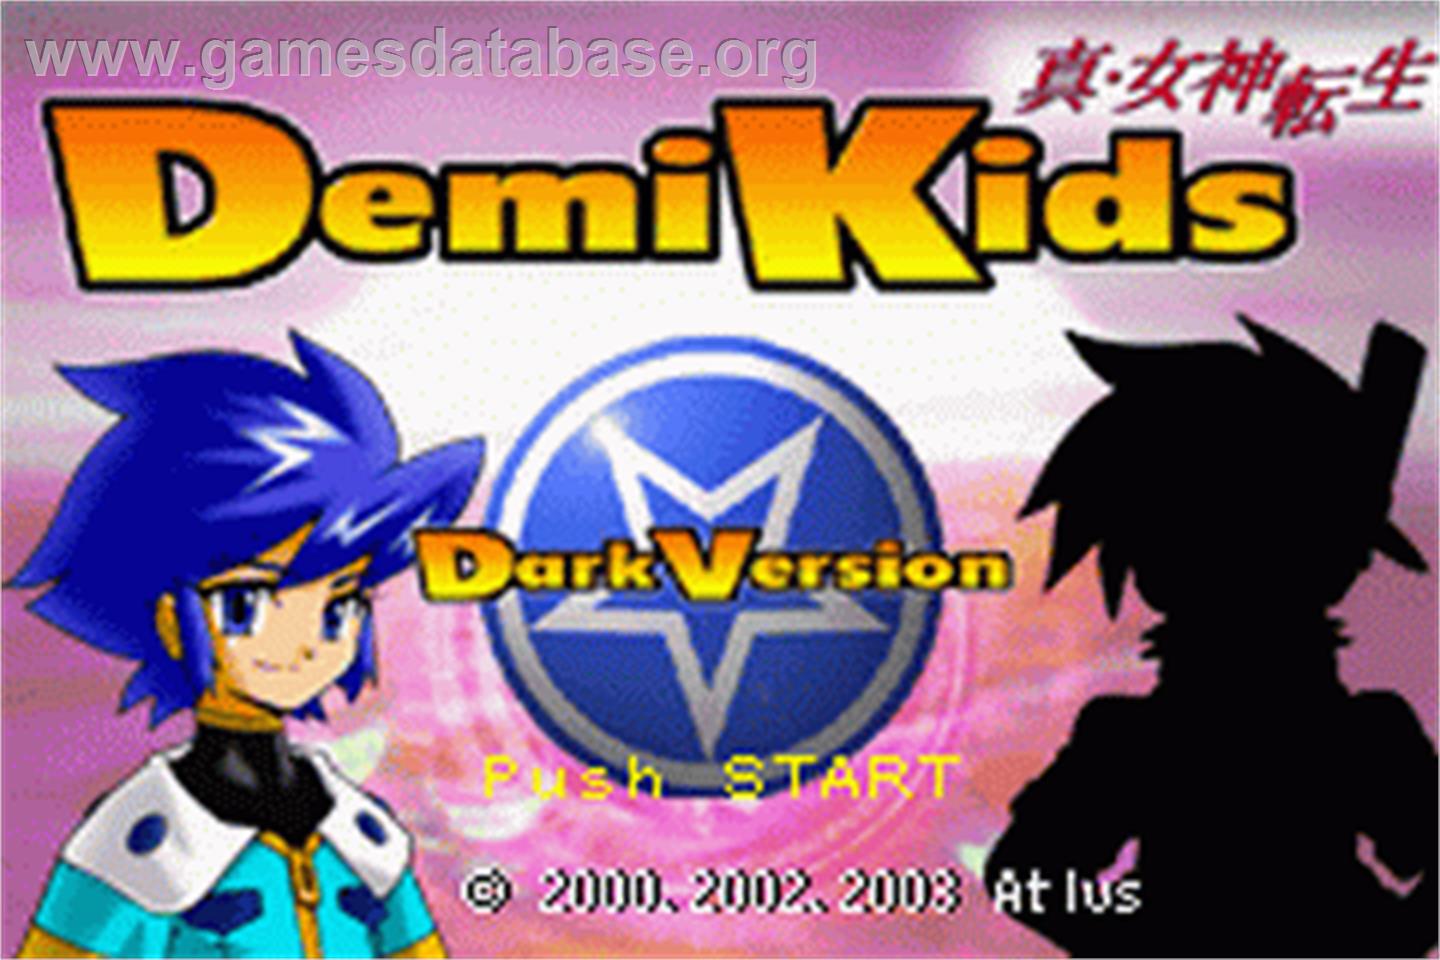 DemiKids: Dark Version - Nintendo Game Boy Advance - Artwork - Title Screen